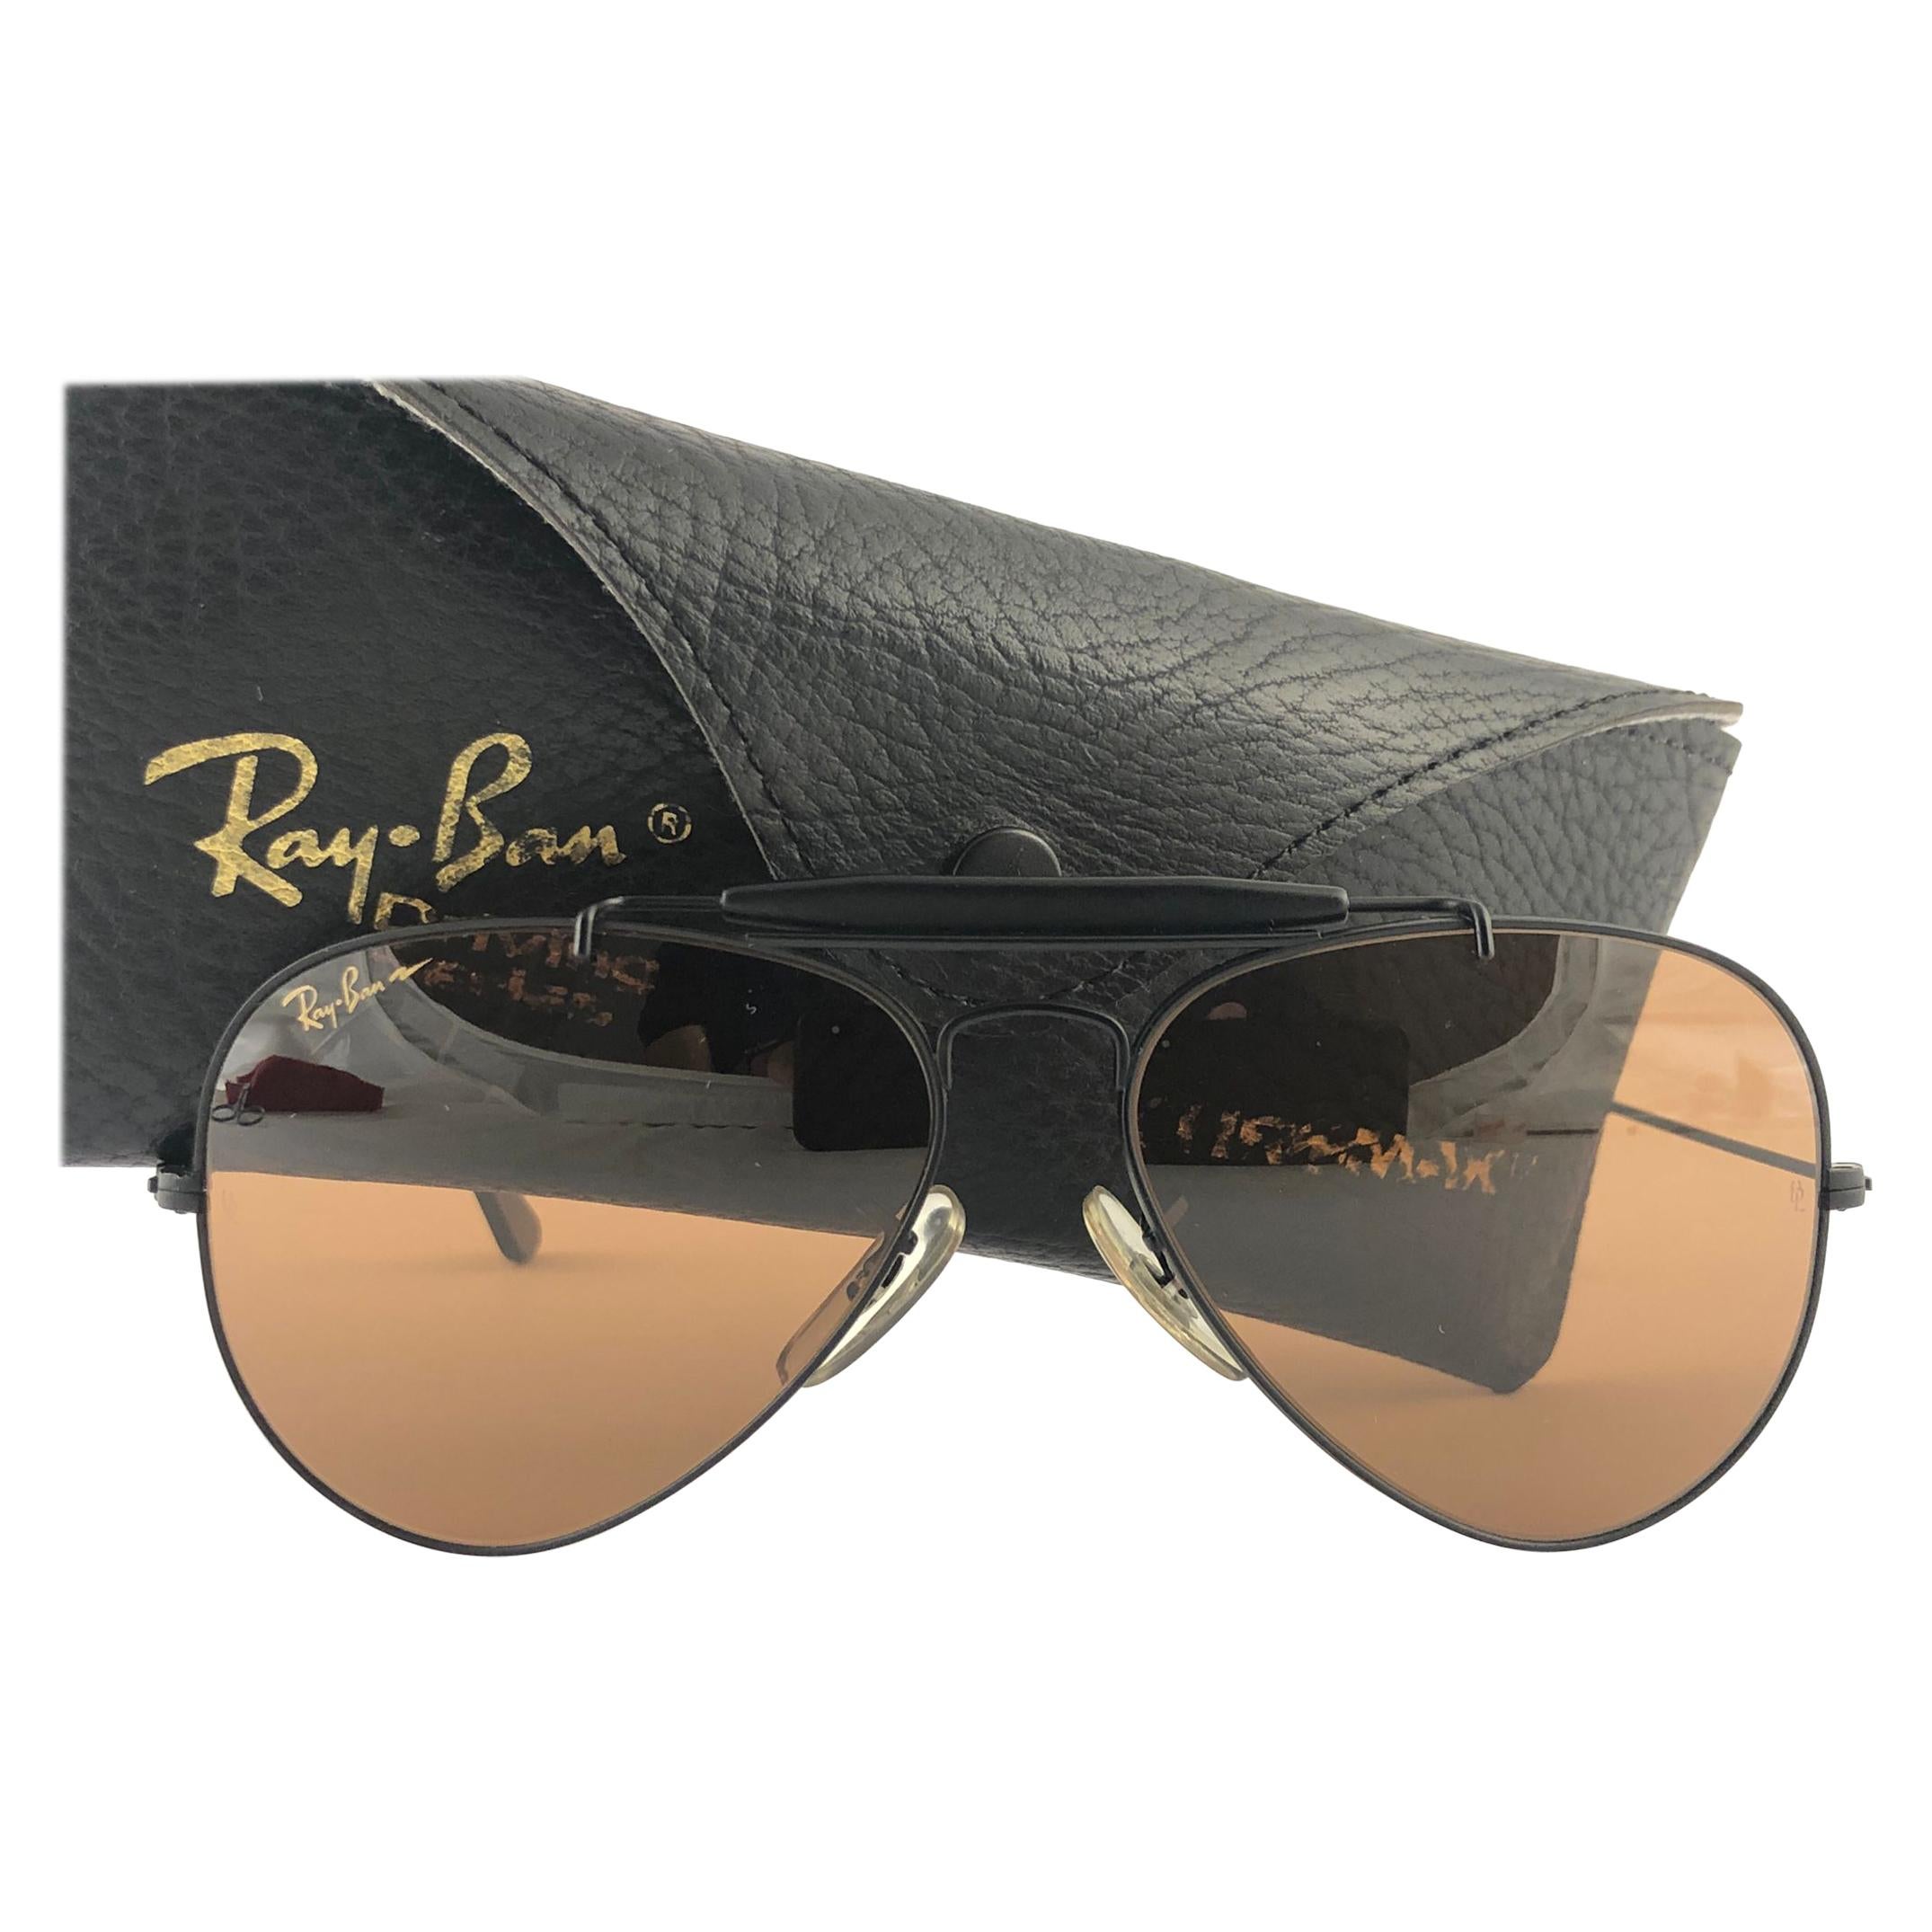 New Ray Ban Chromax 58Mm Outdoorsman B&L Collectors Item USA Sunglasses